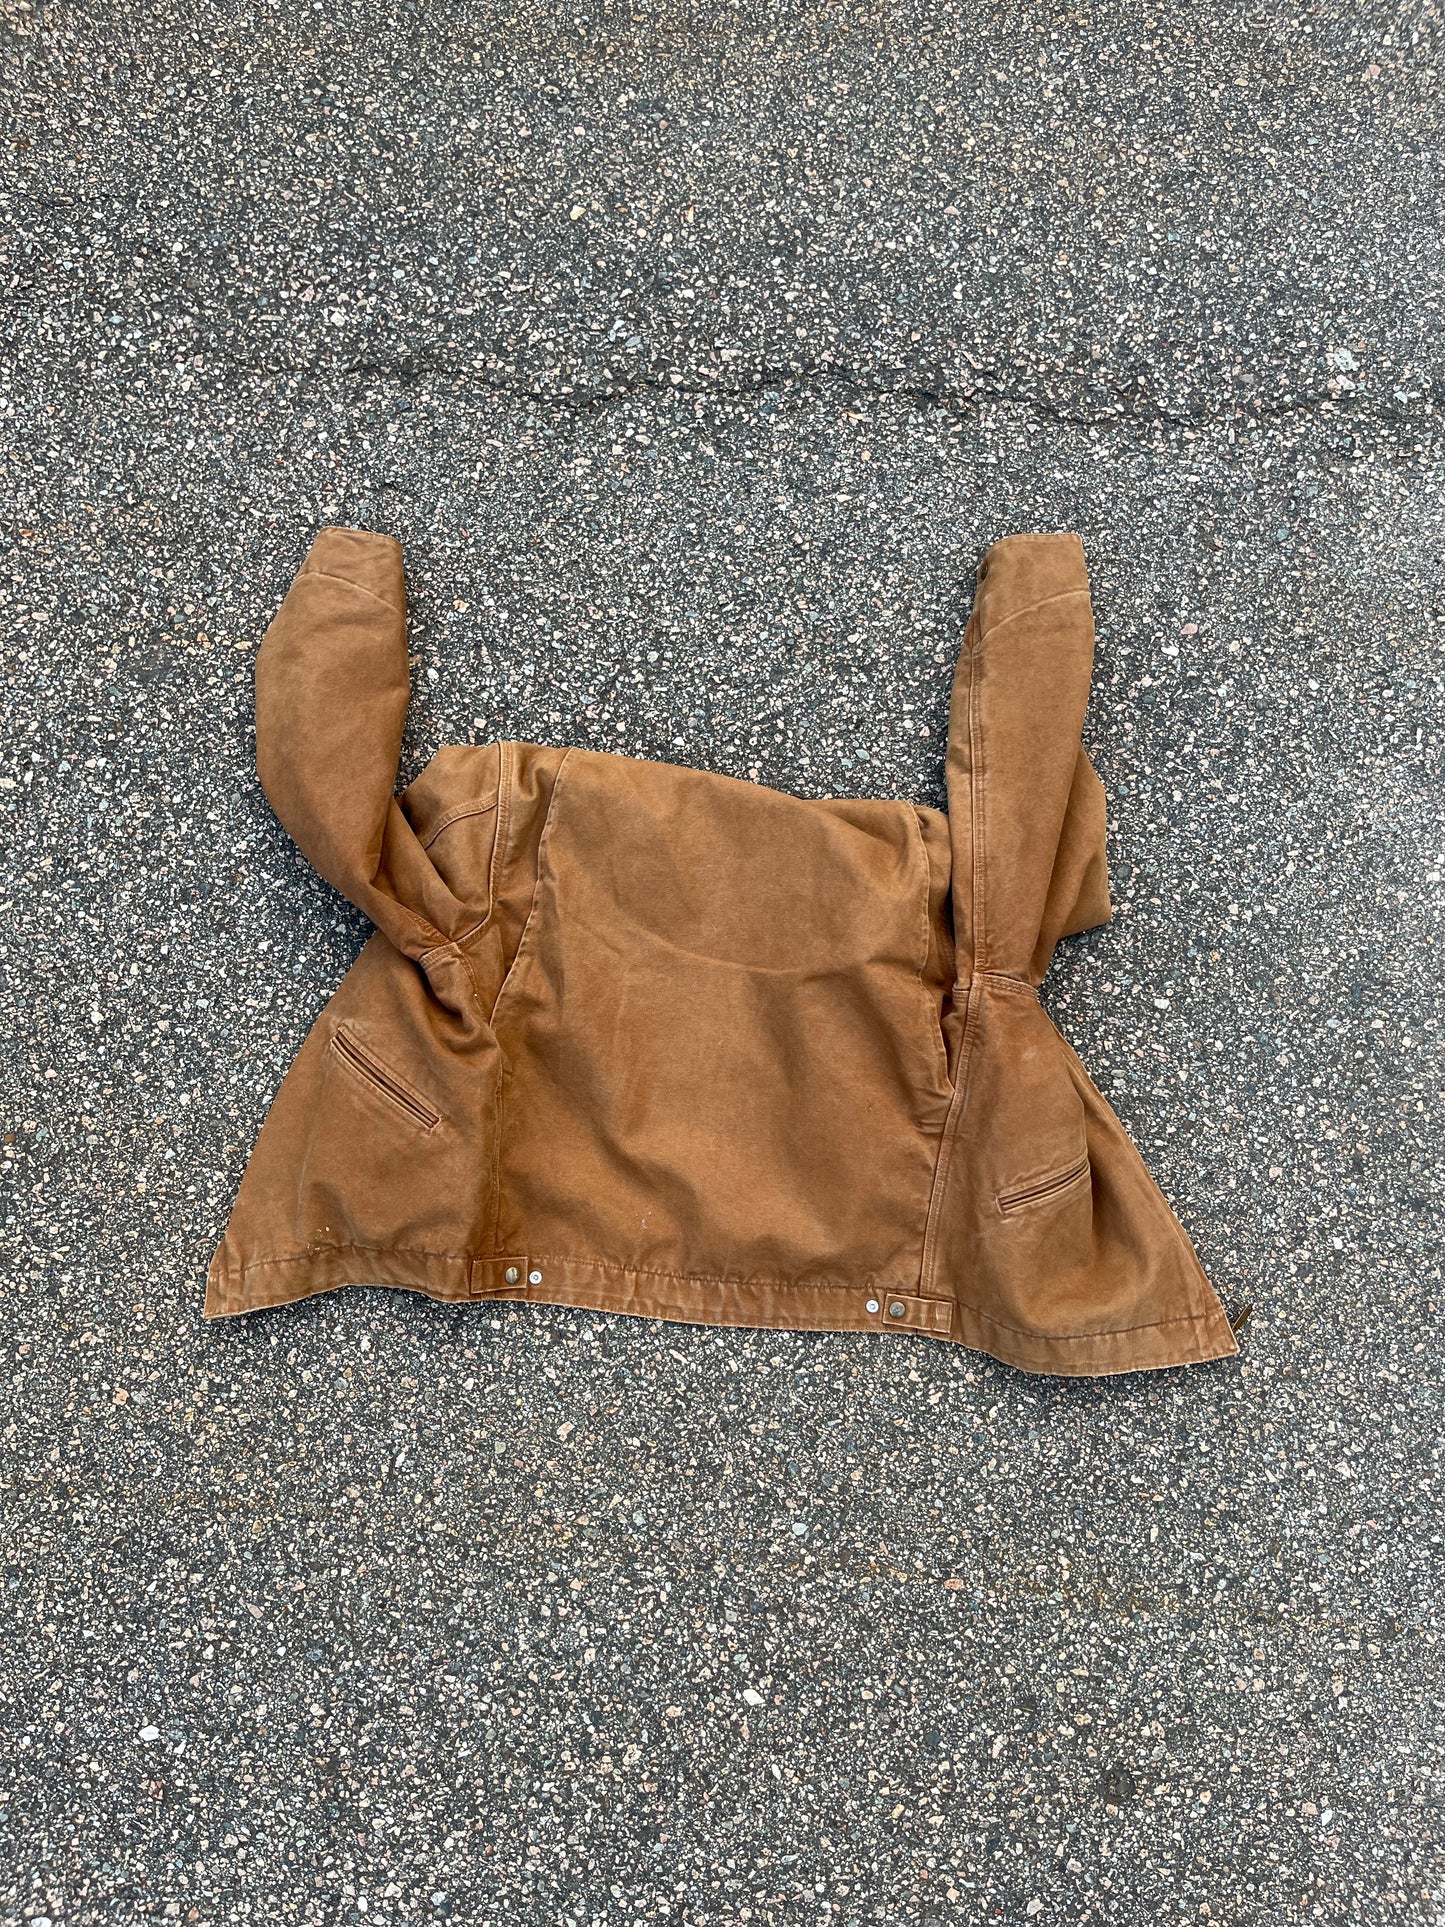 Faded Brown Carhartt Detroit Jacket - Medium